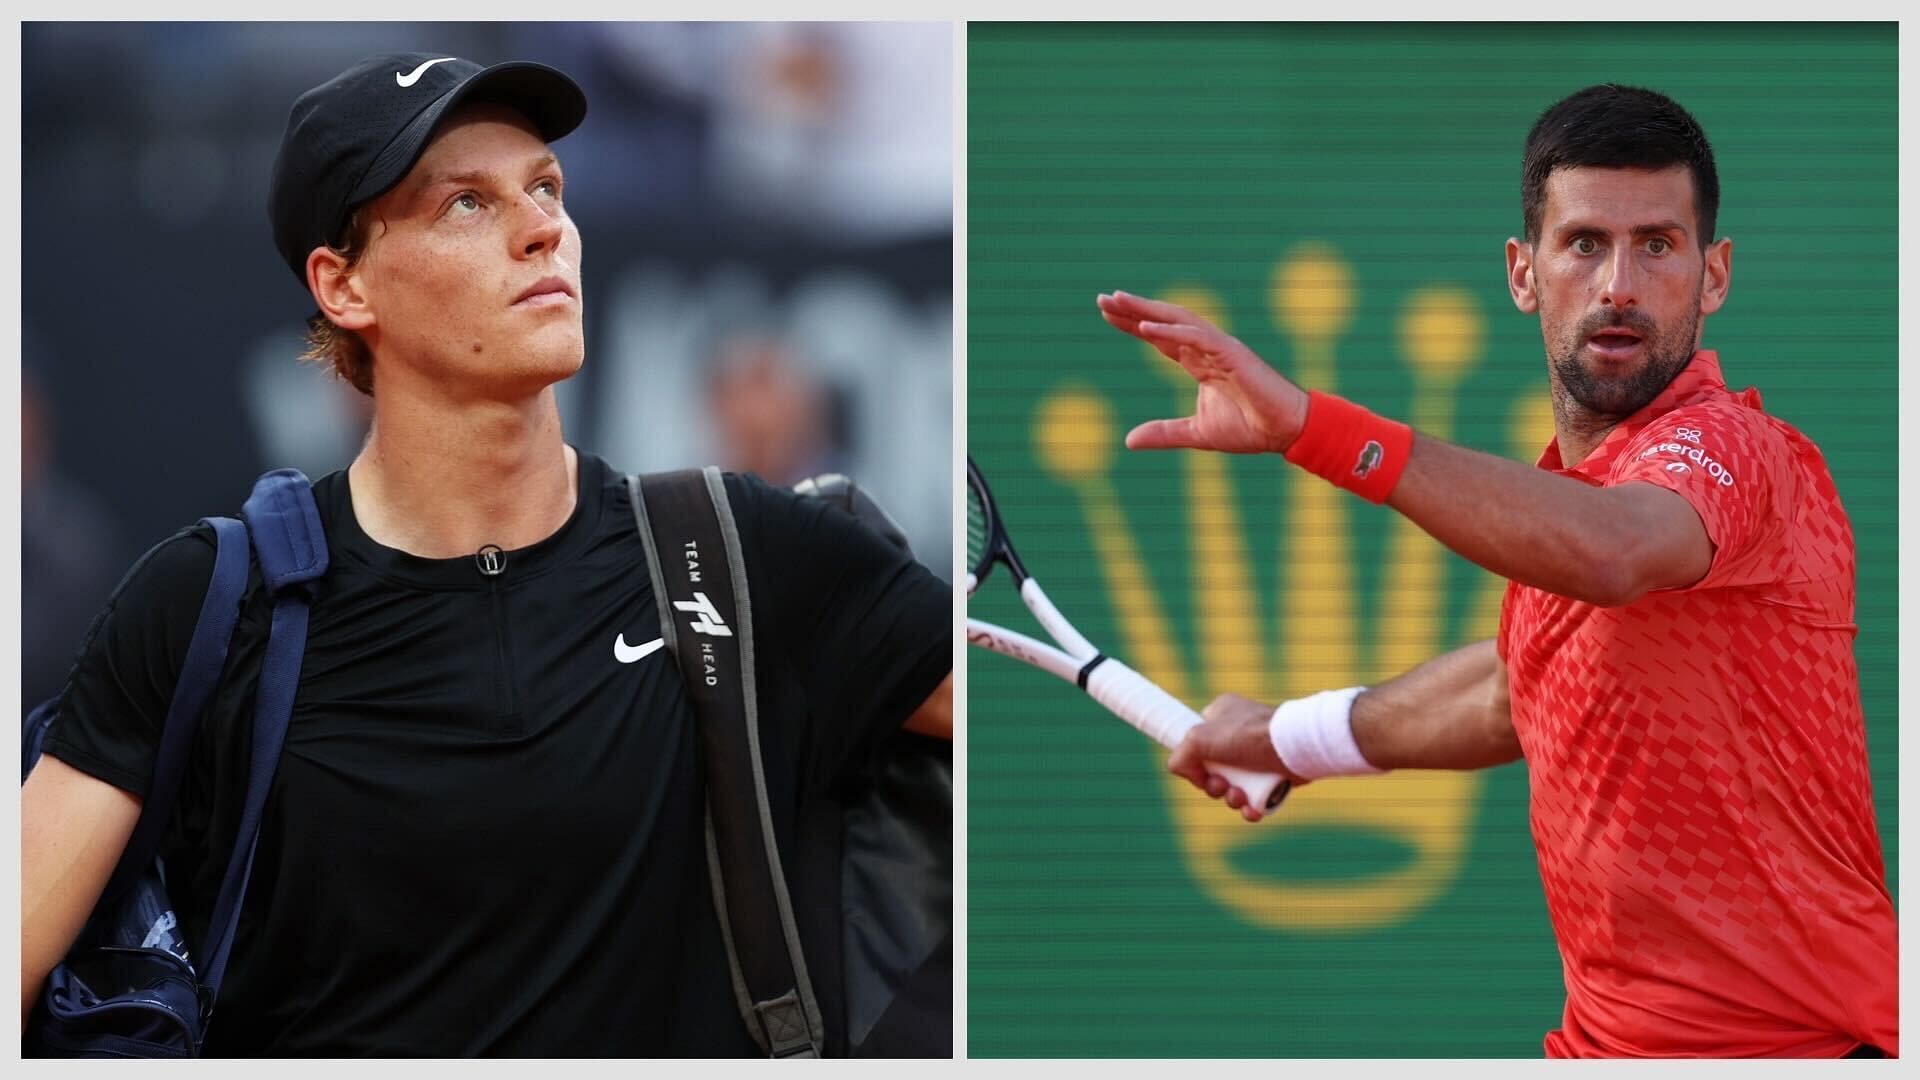 Jannik Sinner (left) takes on Novak Djokovic in the Australian Open semifinal on Friday.